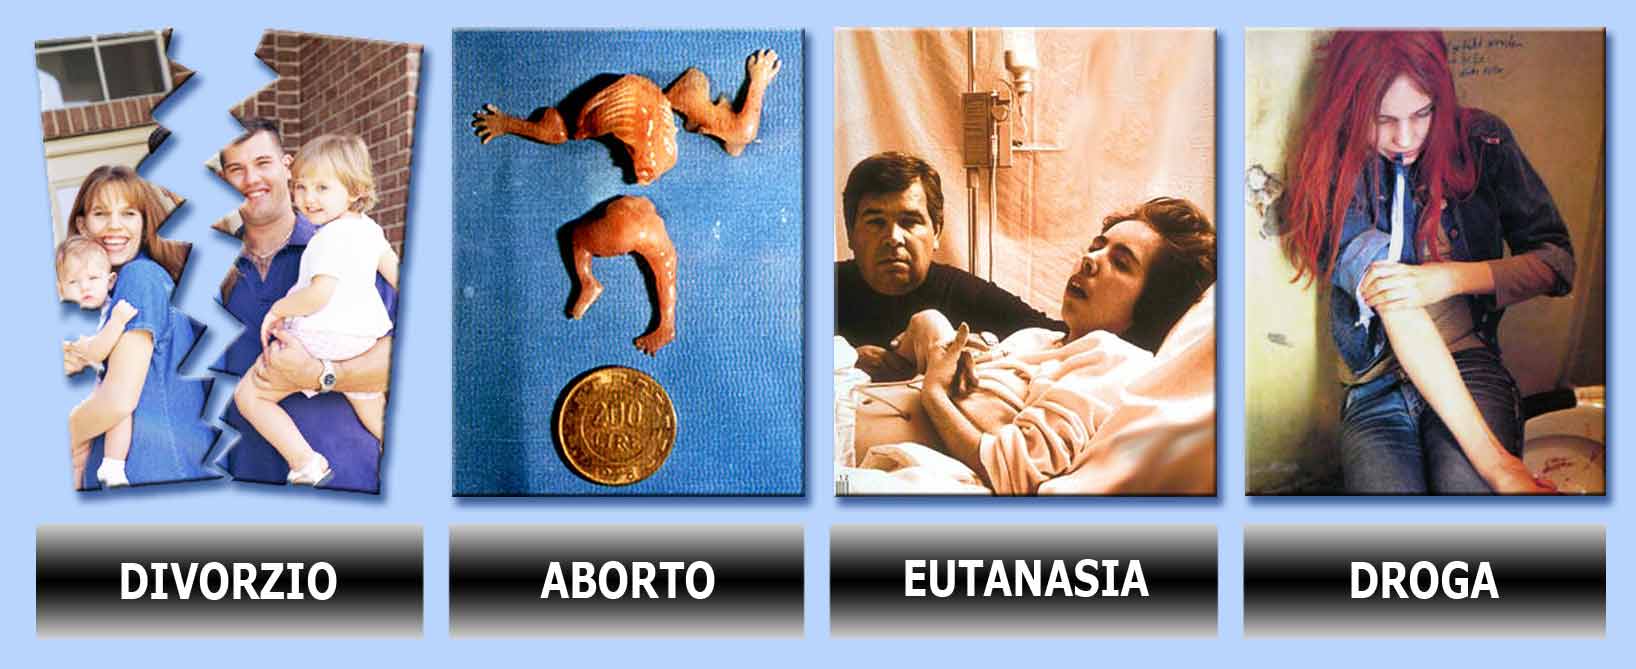 divorzio aborto eutanasia droga